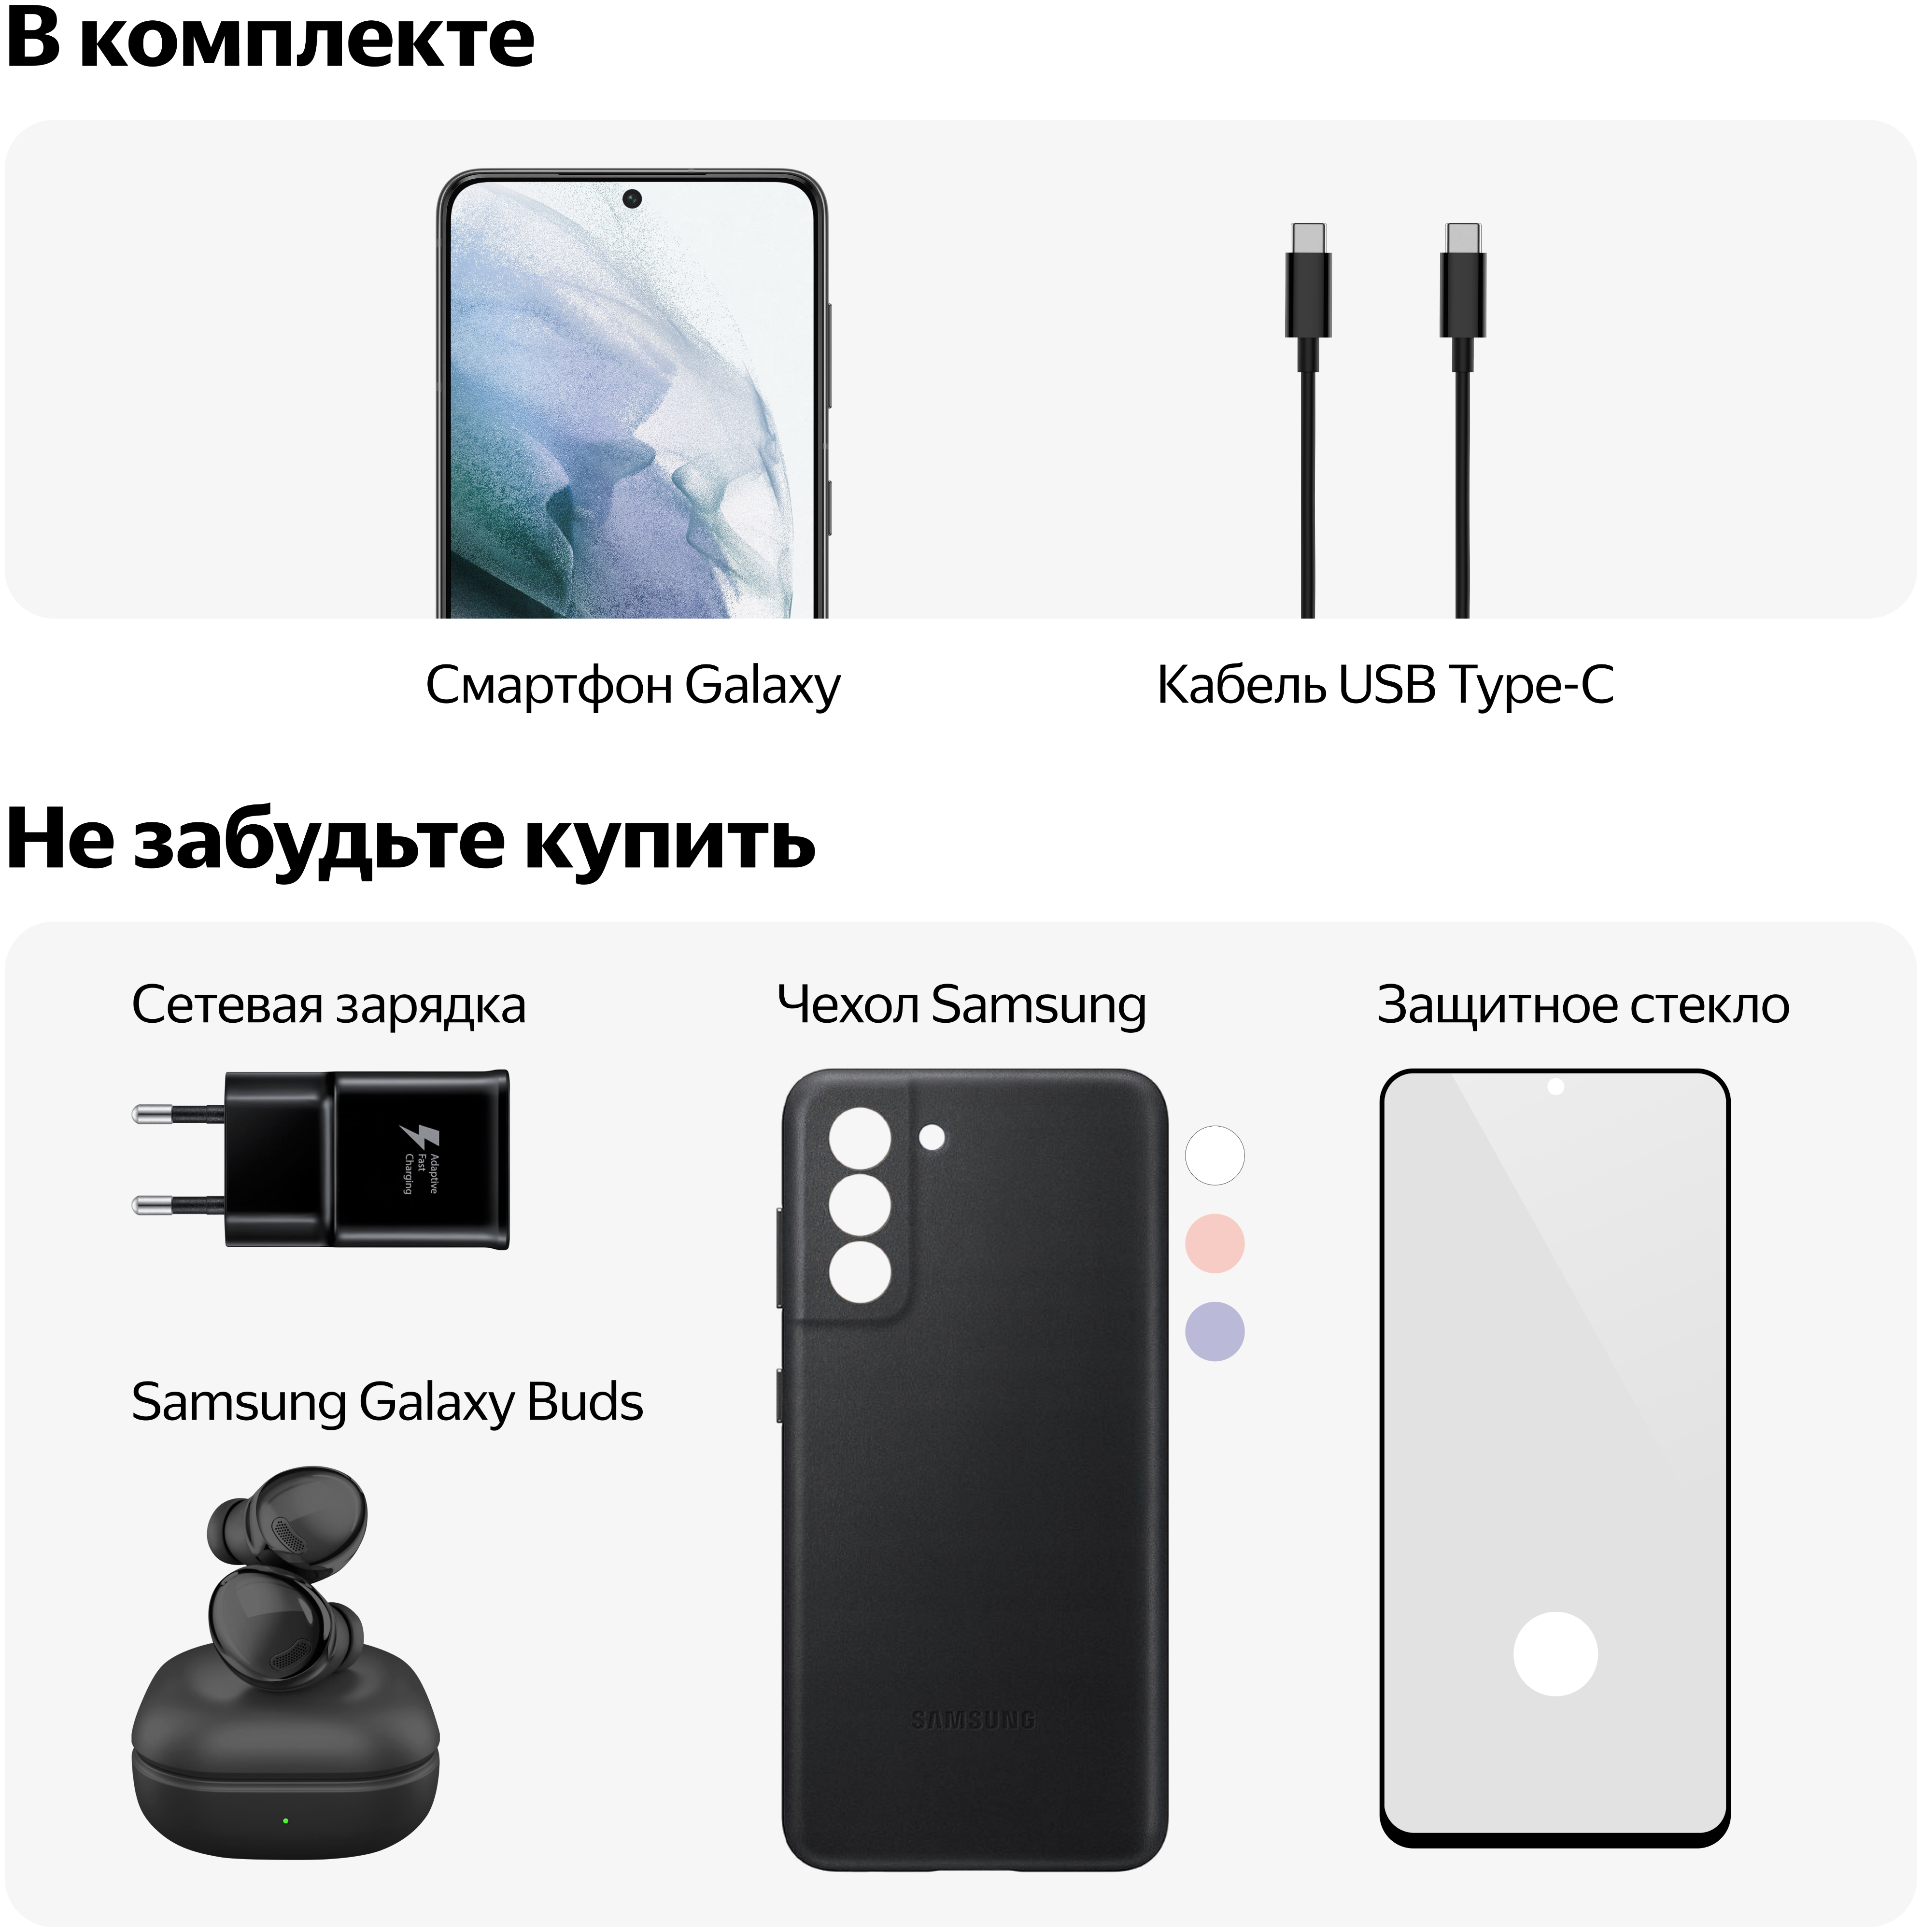 Samsung Galaxy S21 5G (SM-G991B) - 3 камеры: 64 МП, 12 МП, 12 МП